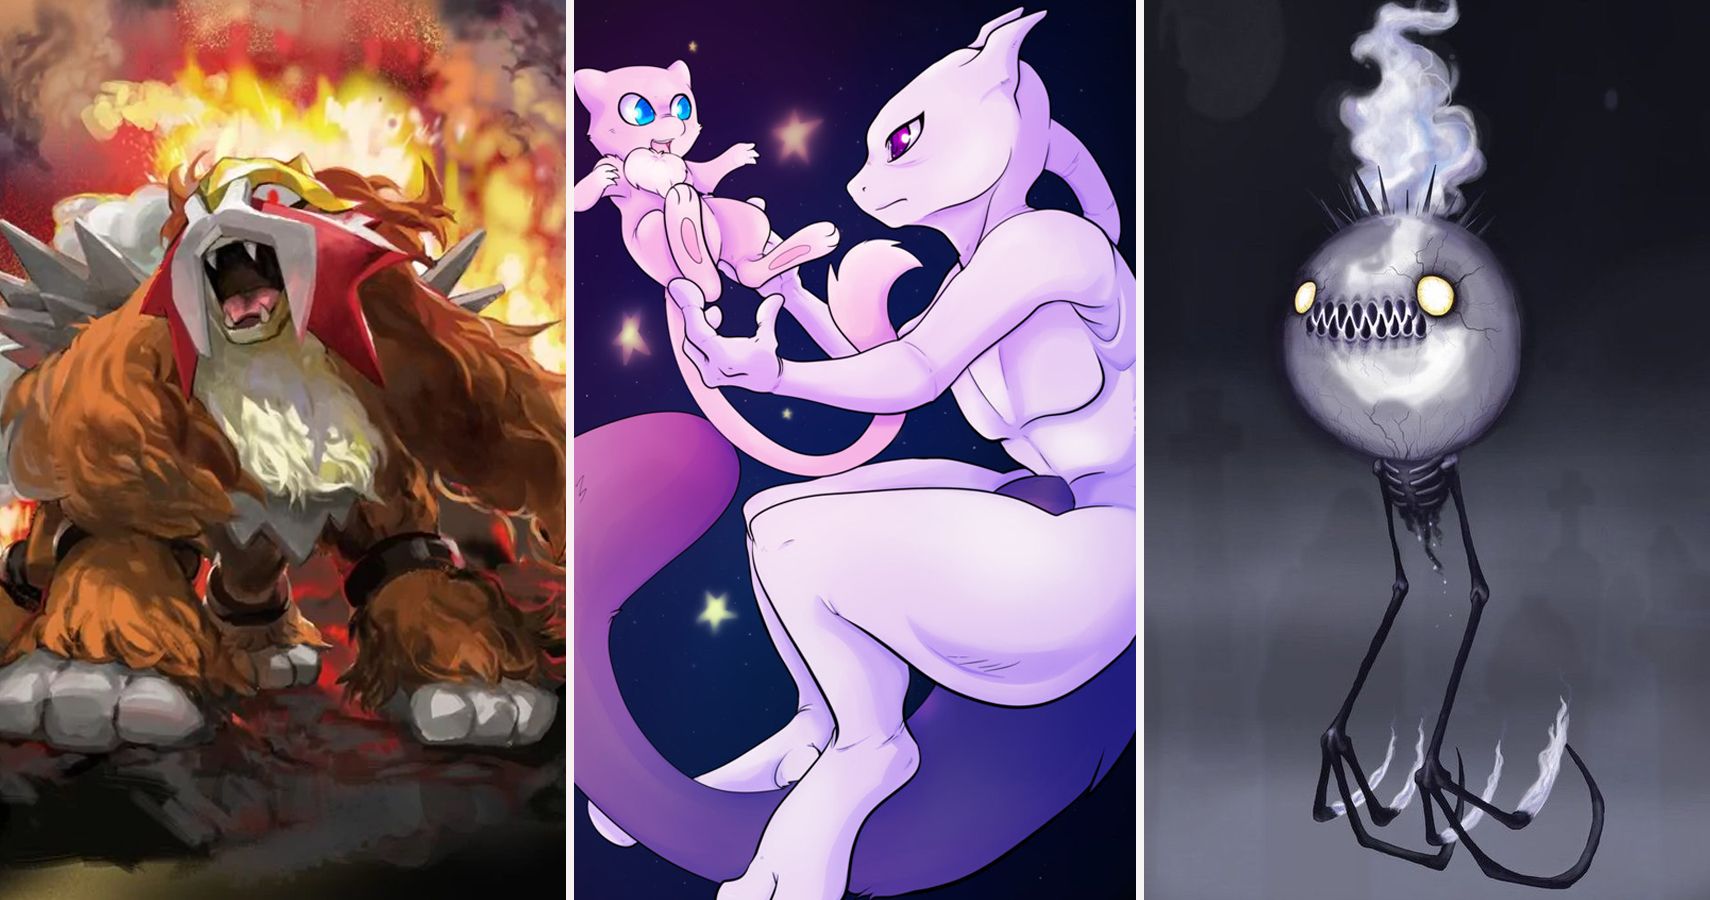 Fairy-type Confirmed! – Pokémon Mythology